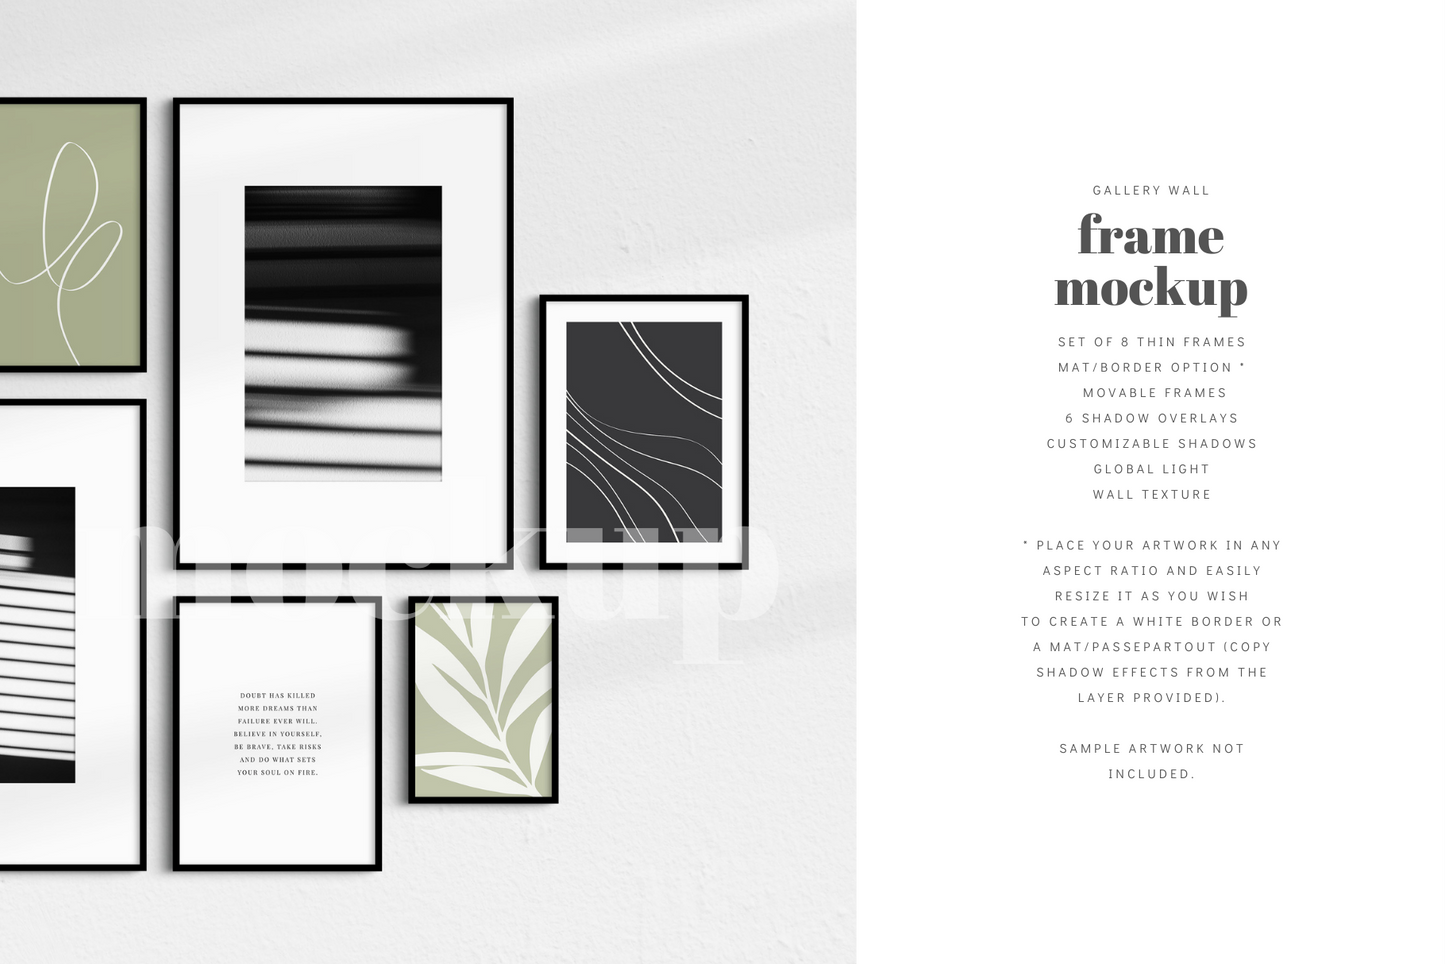 Gallery Wall Mockup | Set of 8 Thin Black Frames | Frame Mockup | PSD